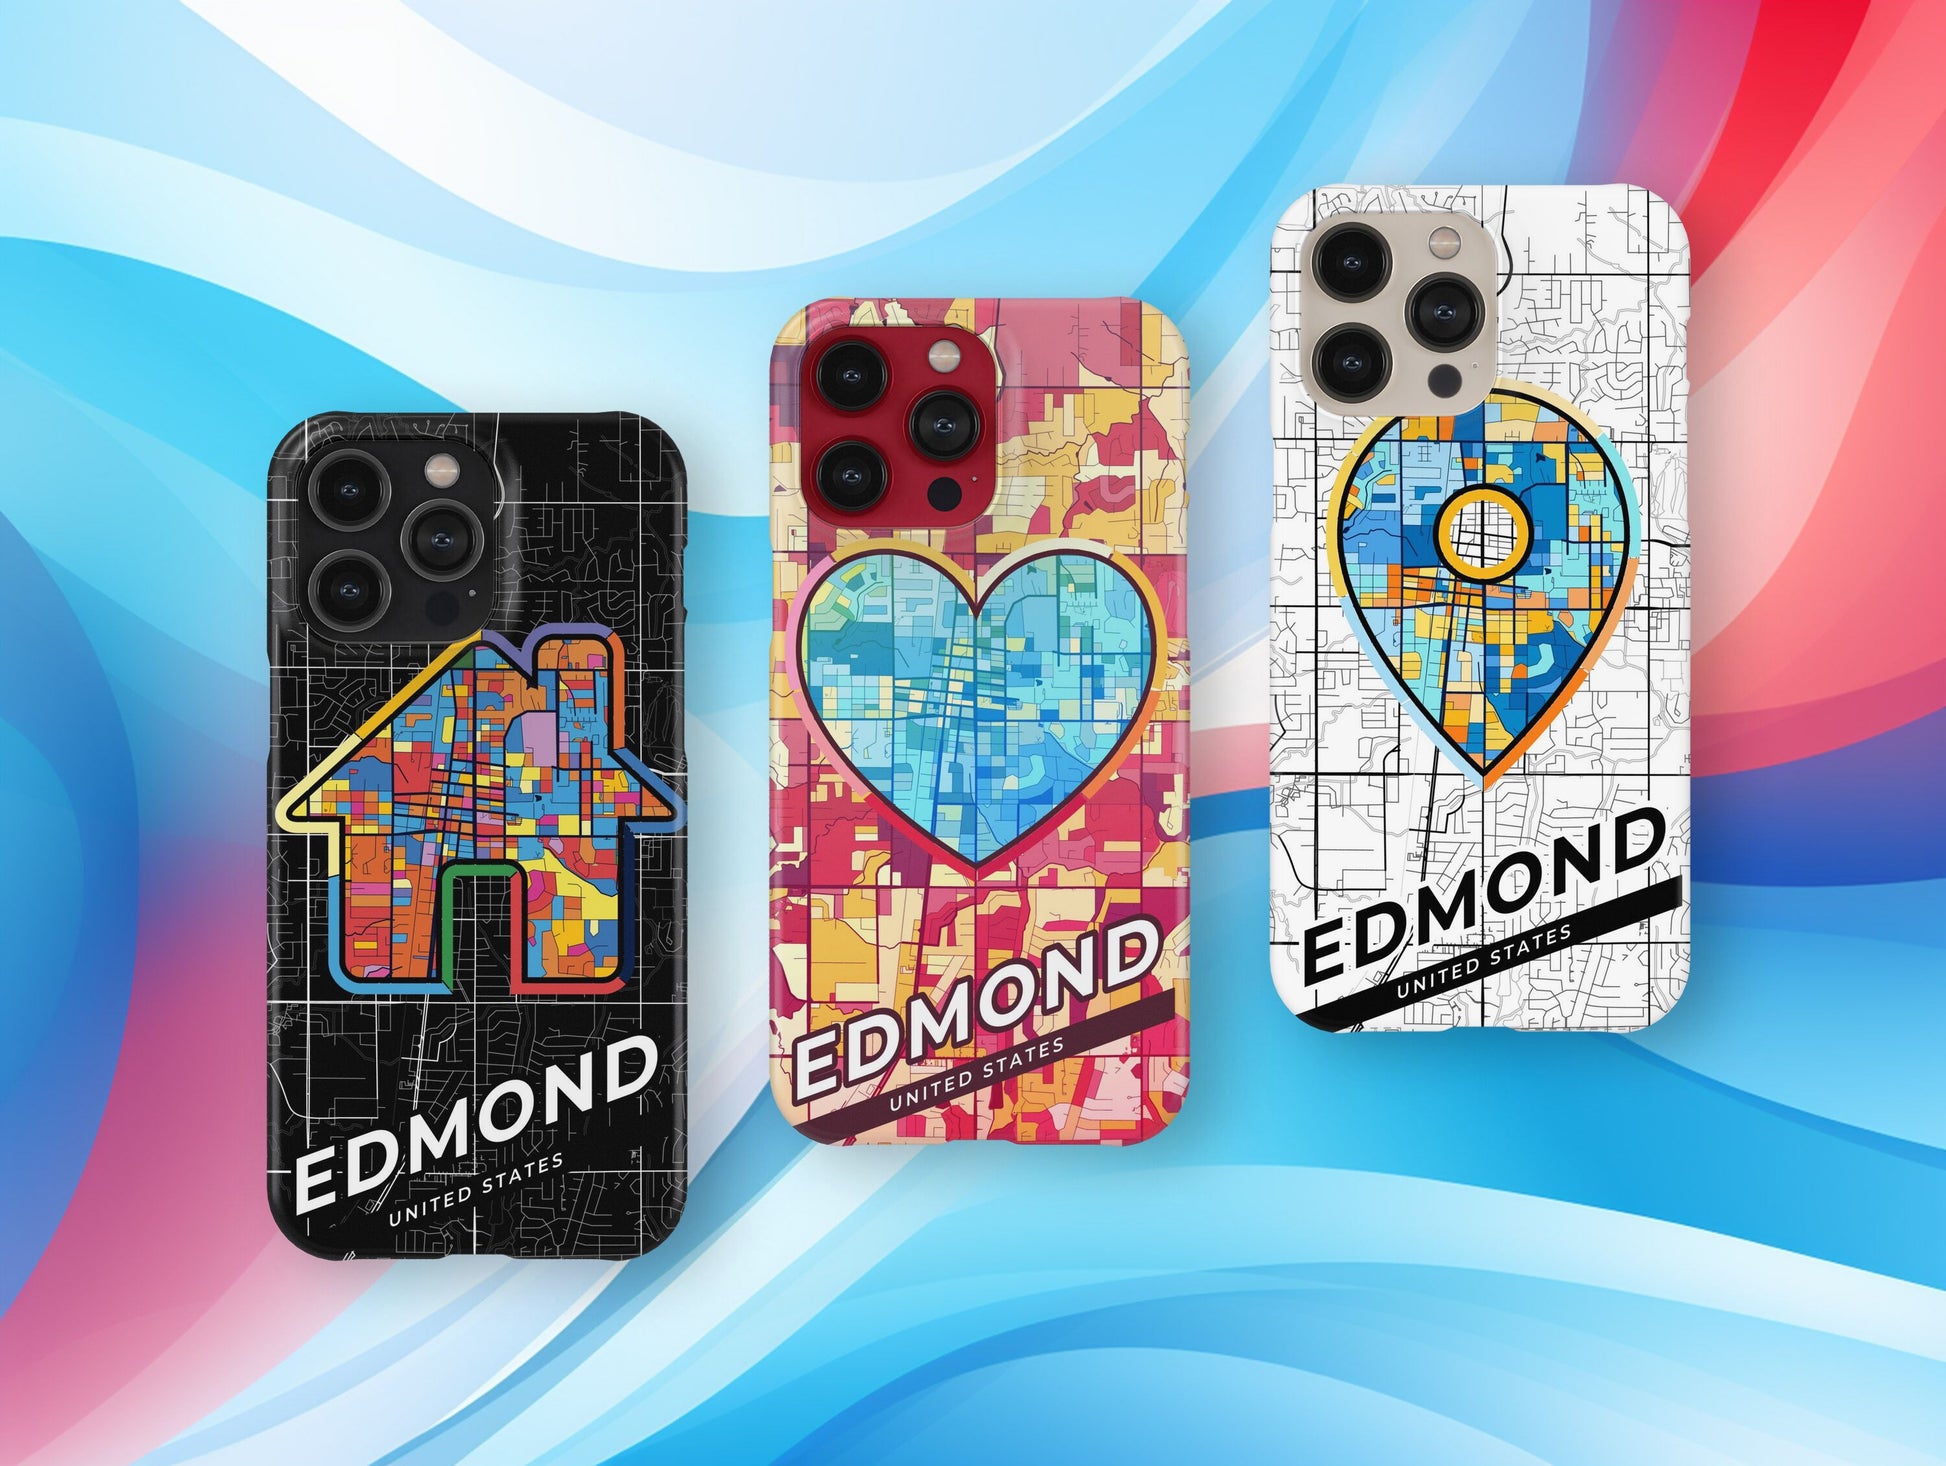 Edmond Oklahoma slim phone case with colorful icon. Birthday, wedding or housewarming gift. Couple match cases.